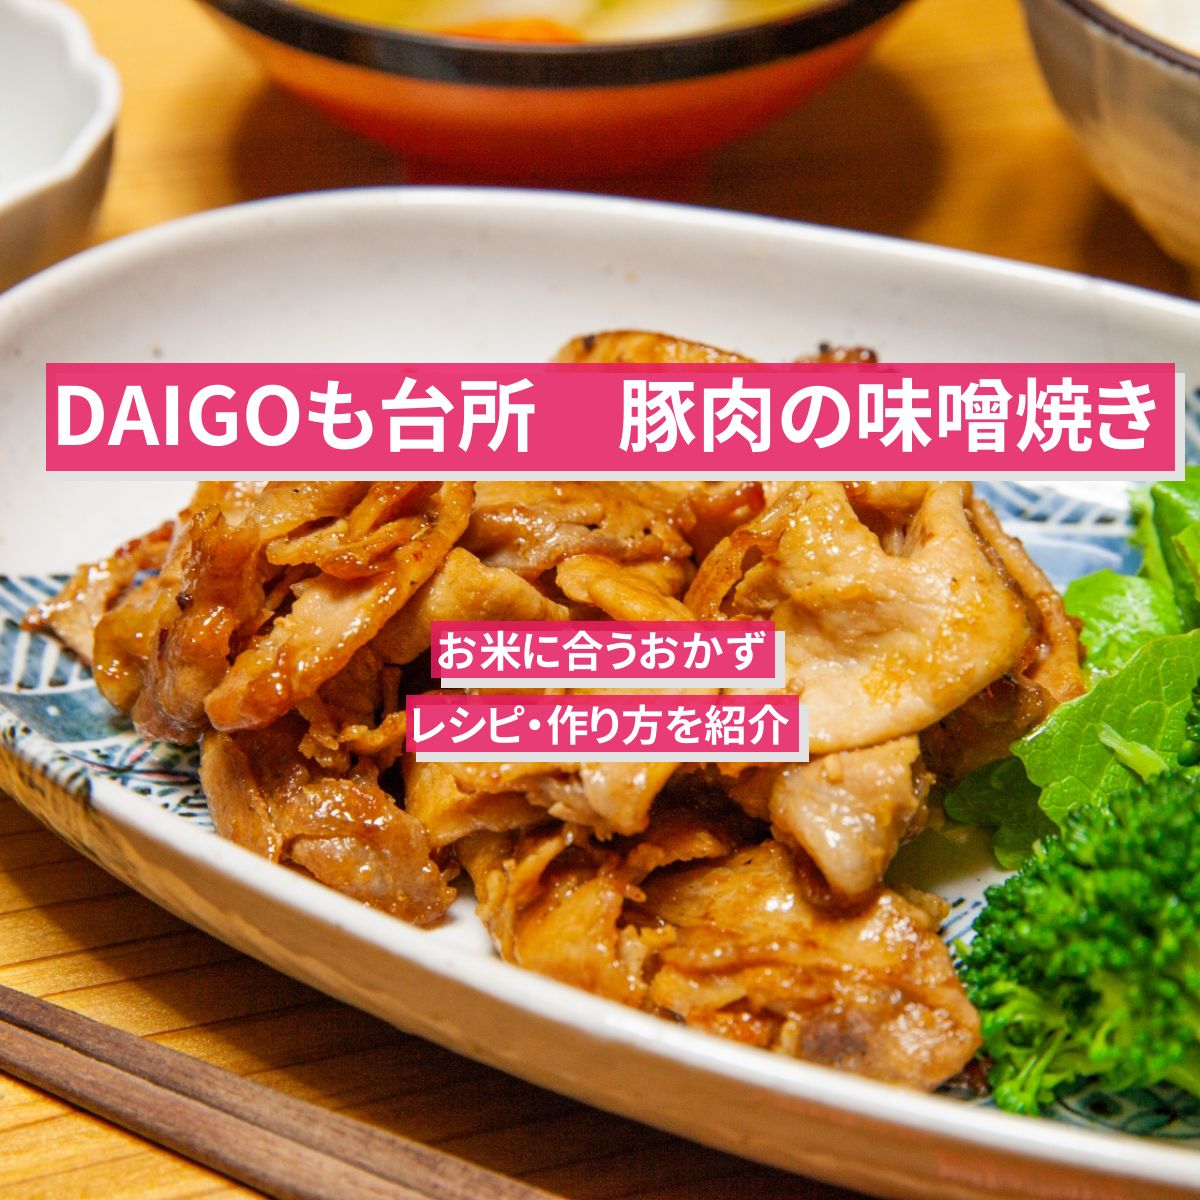 【DAIGOも台所】『豚肉の味噌焼き』のレシピ・作り方を紹介